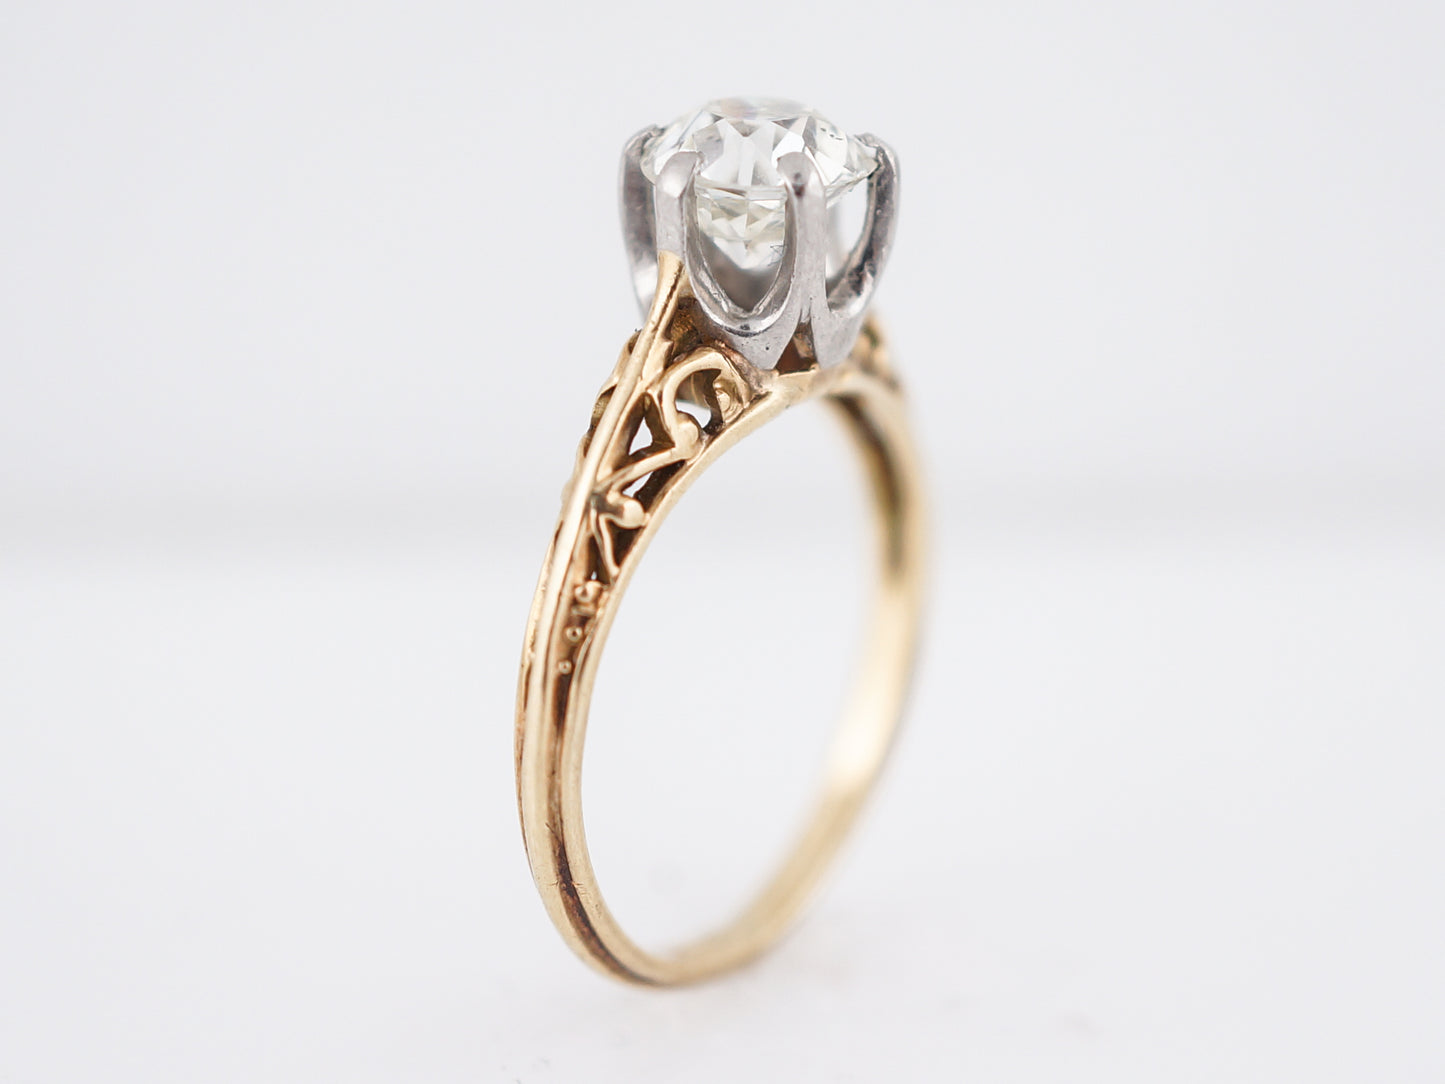 Antique Engagement Ring Art Deco .93 Old European Cut Diamond in 14k Yellow Gold & Platinum